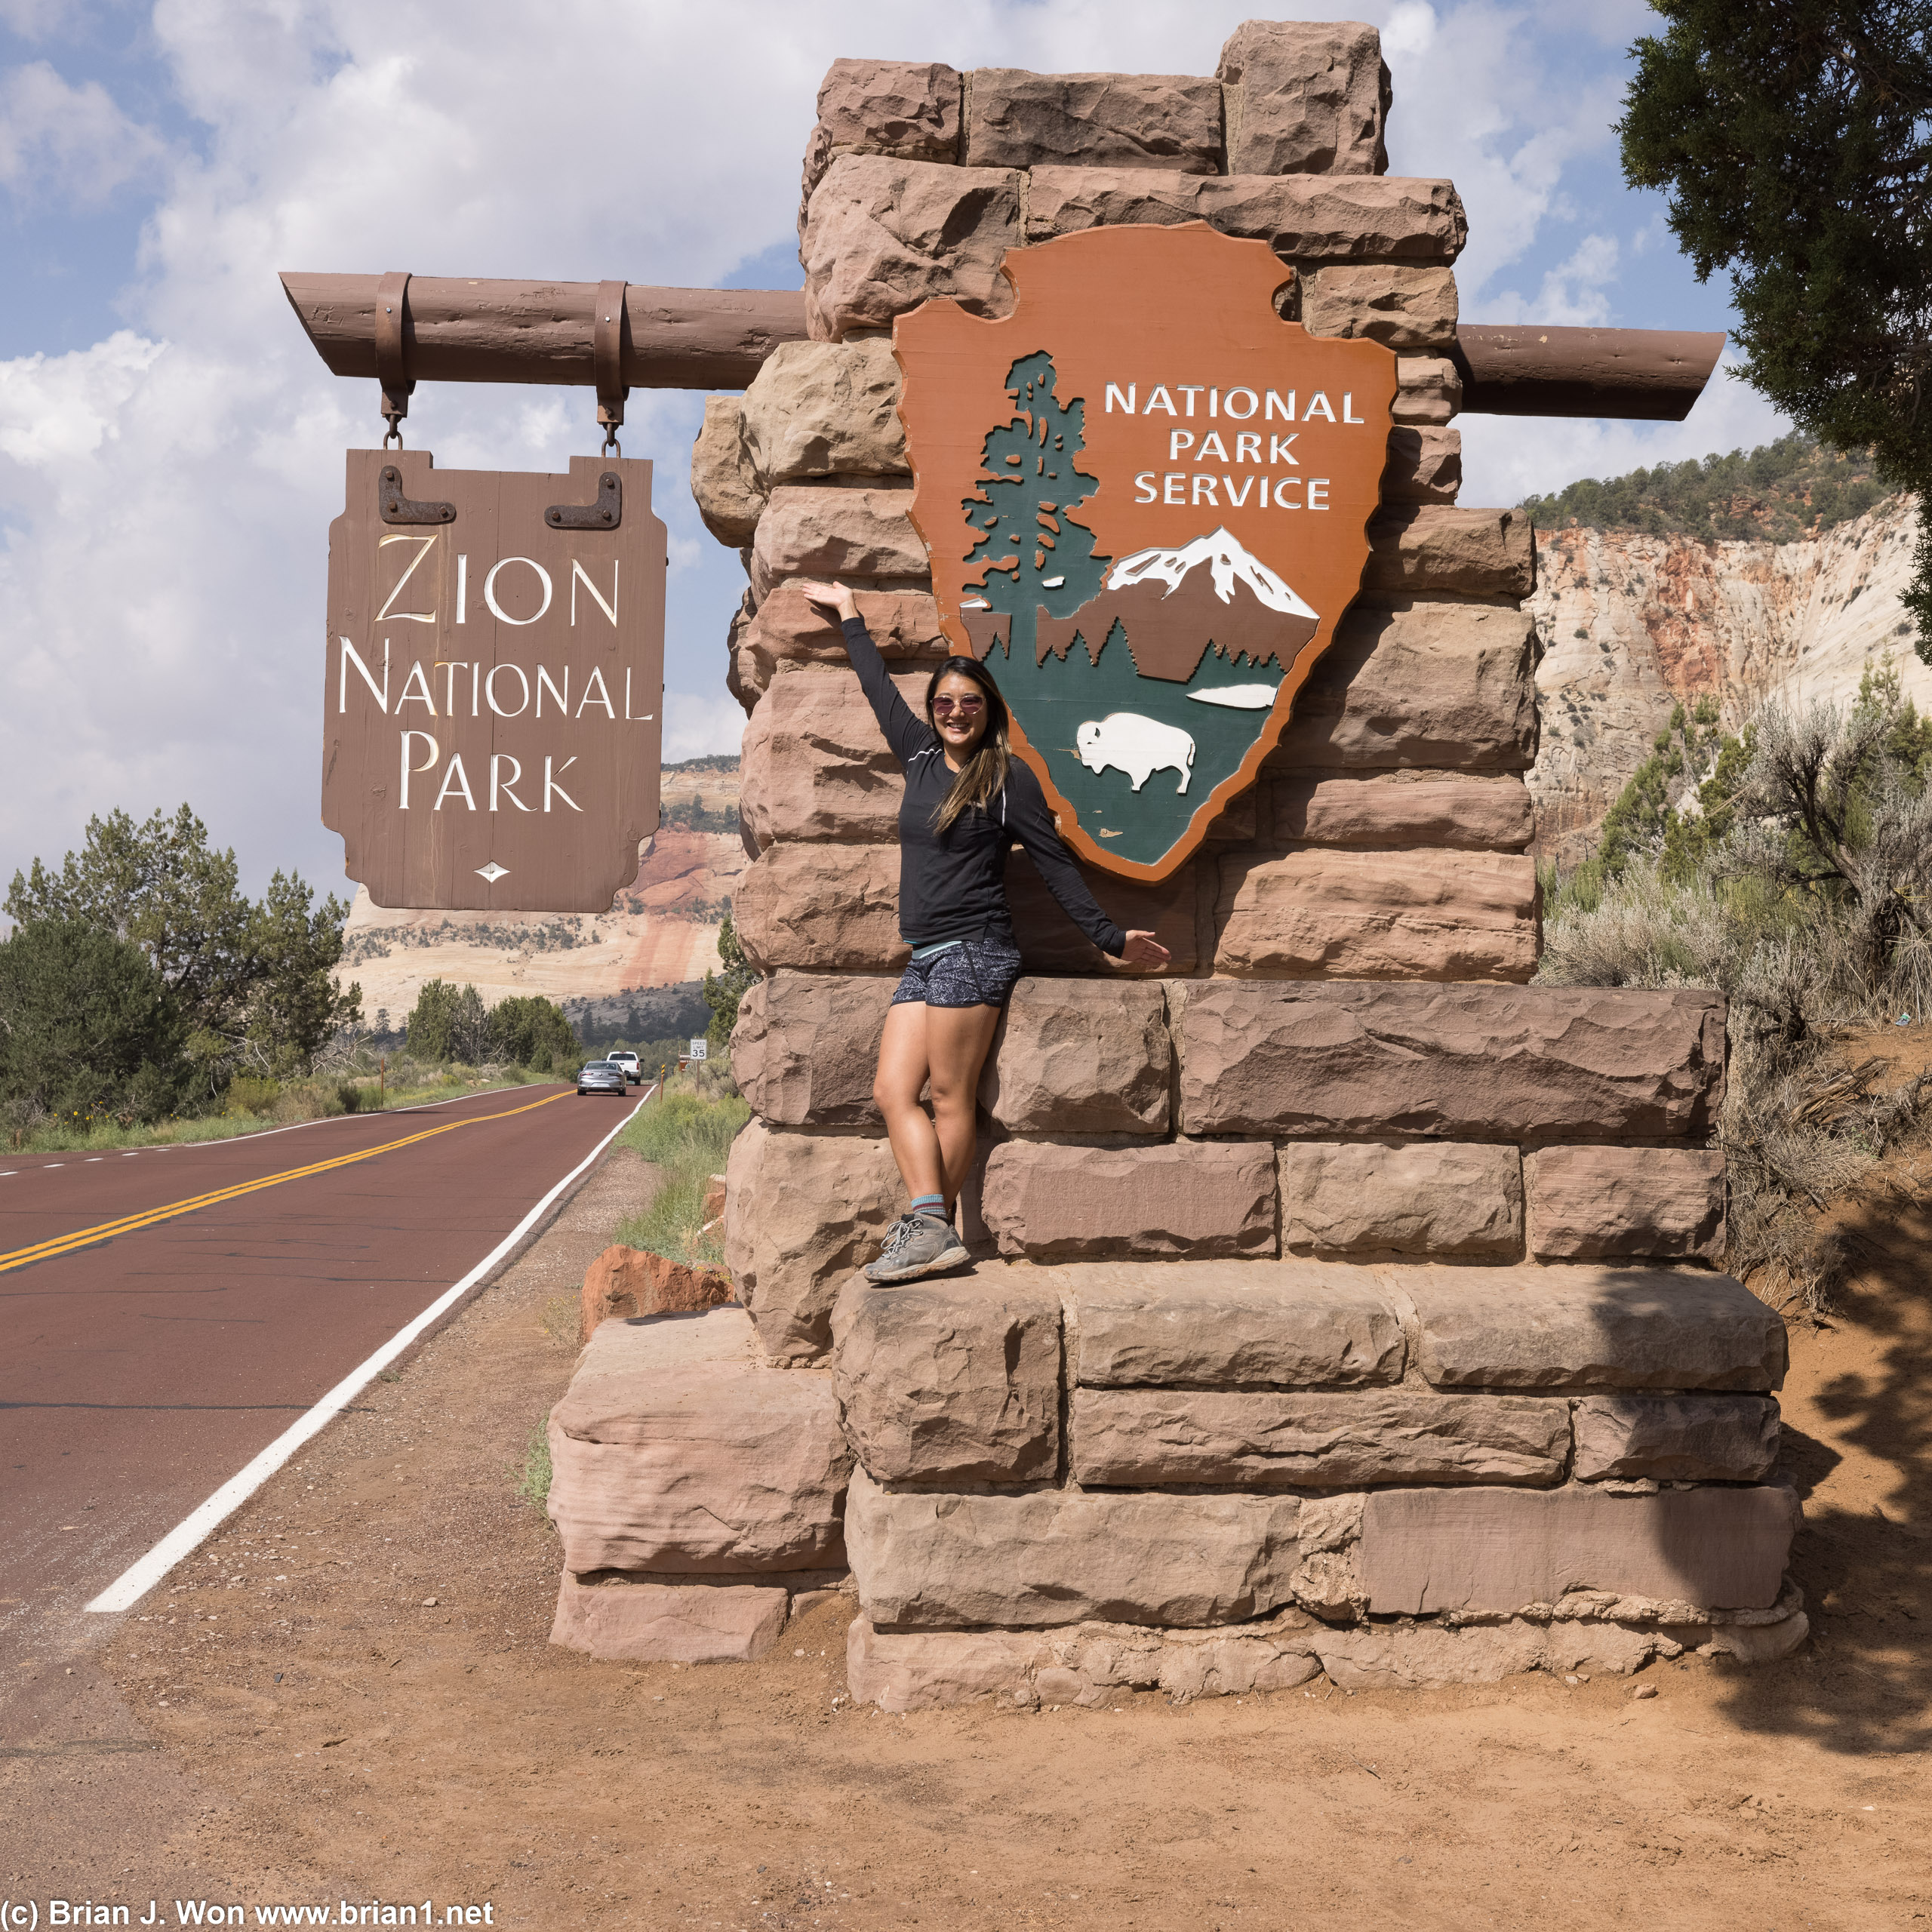 Zion National Park entrance sign.